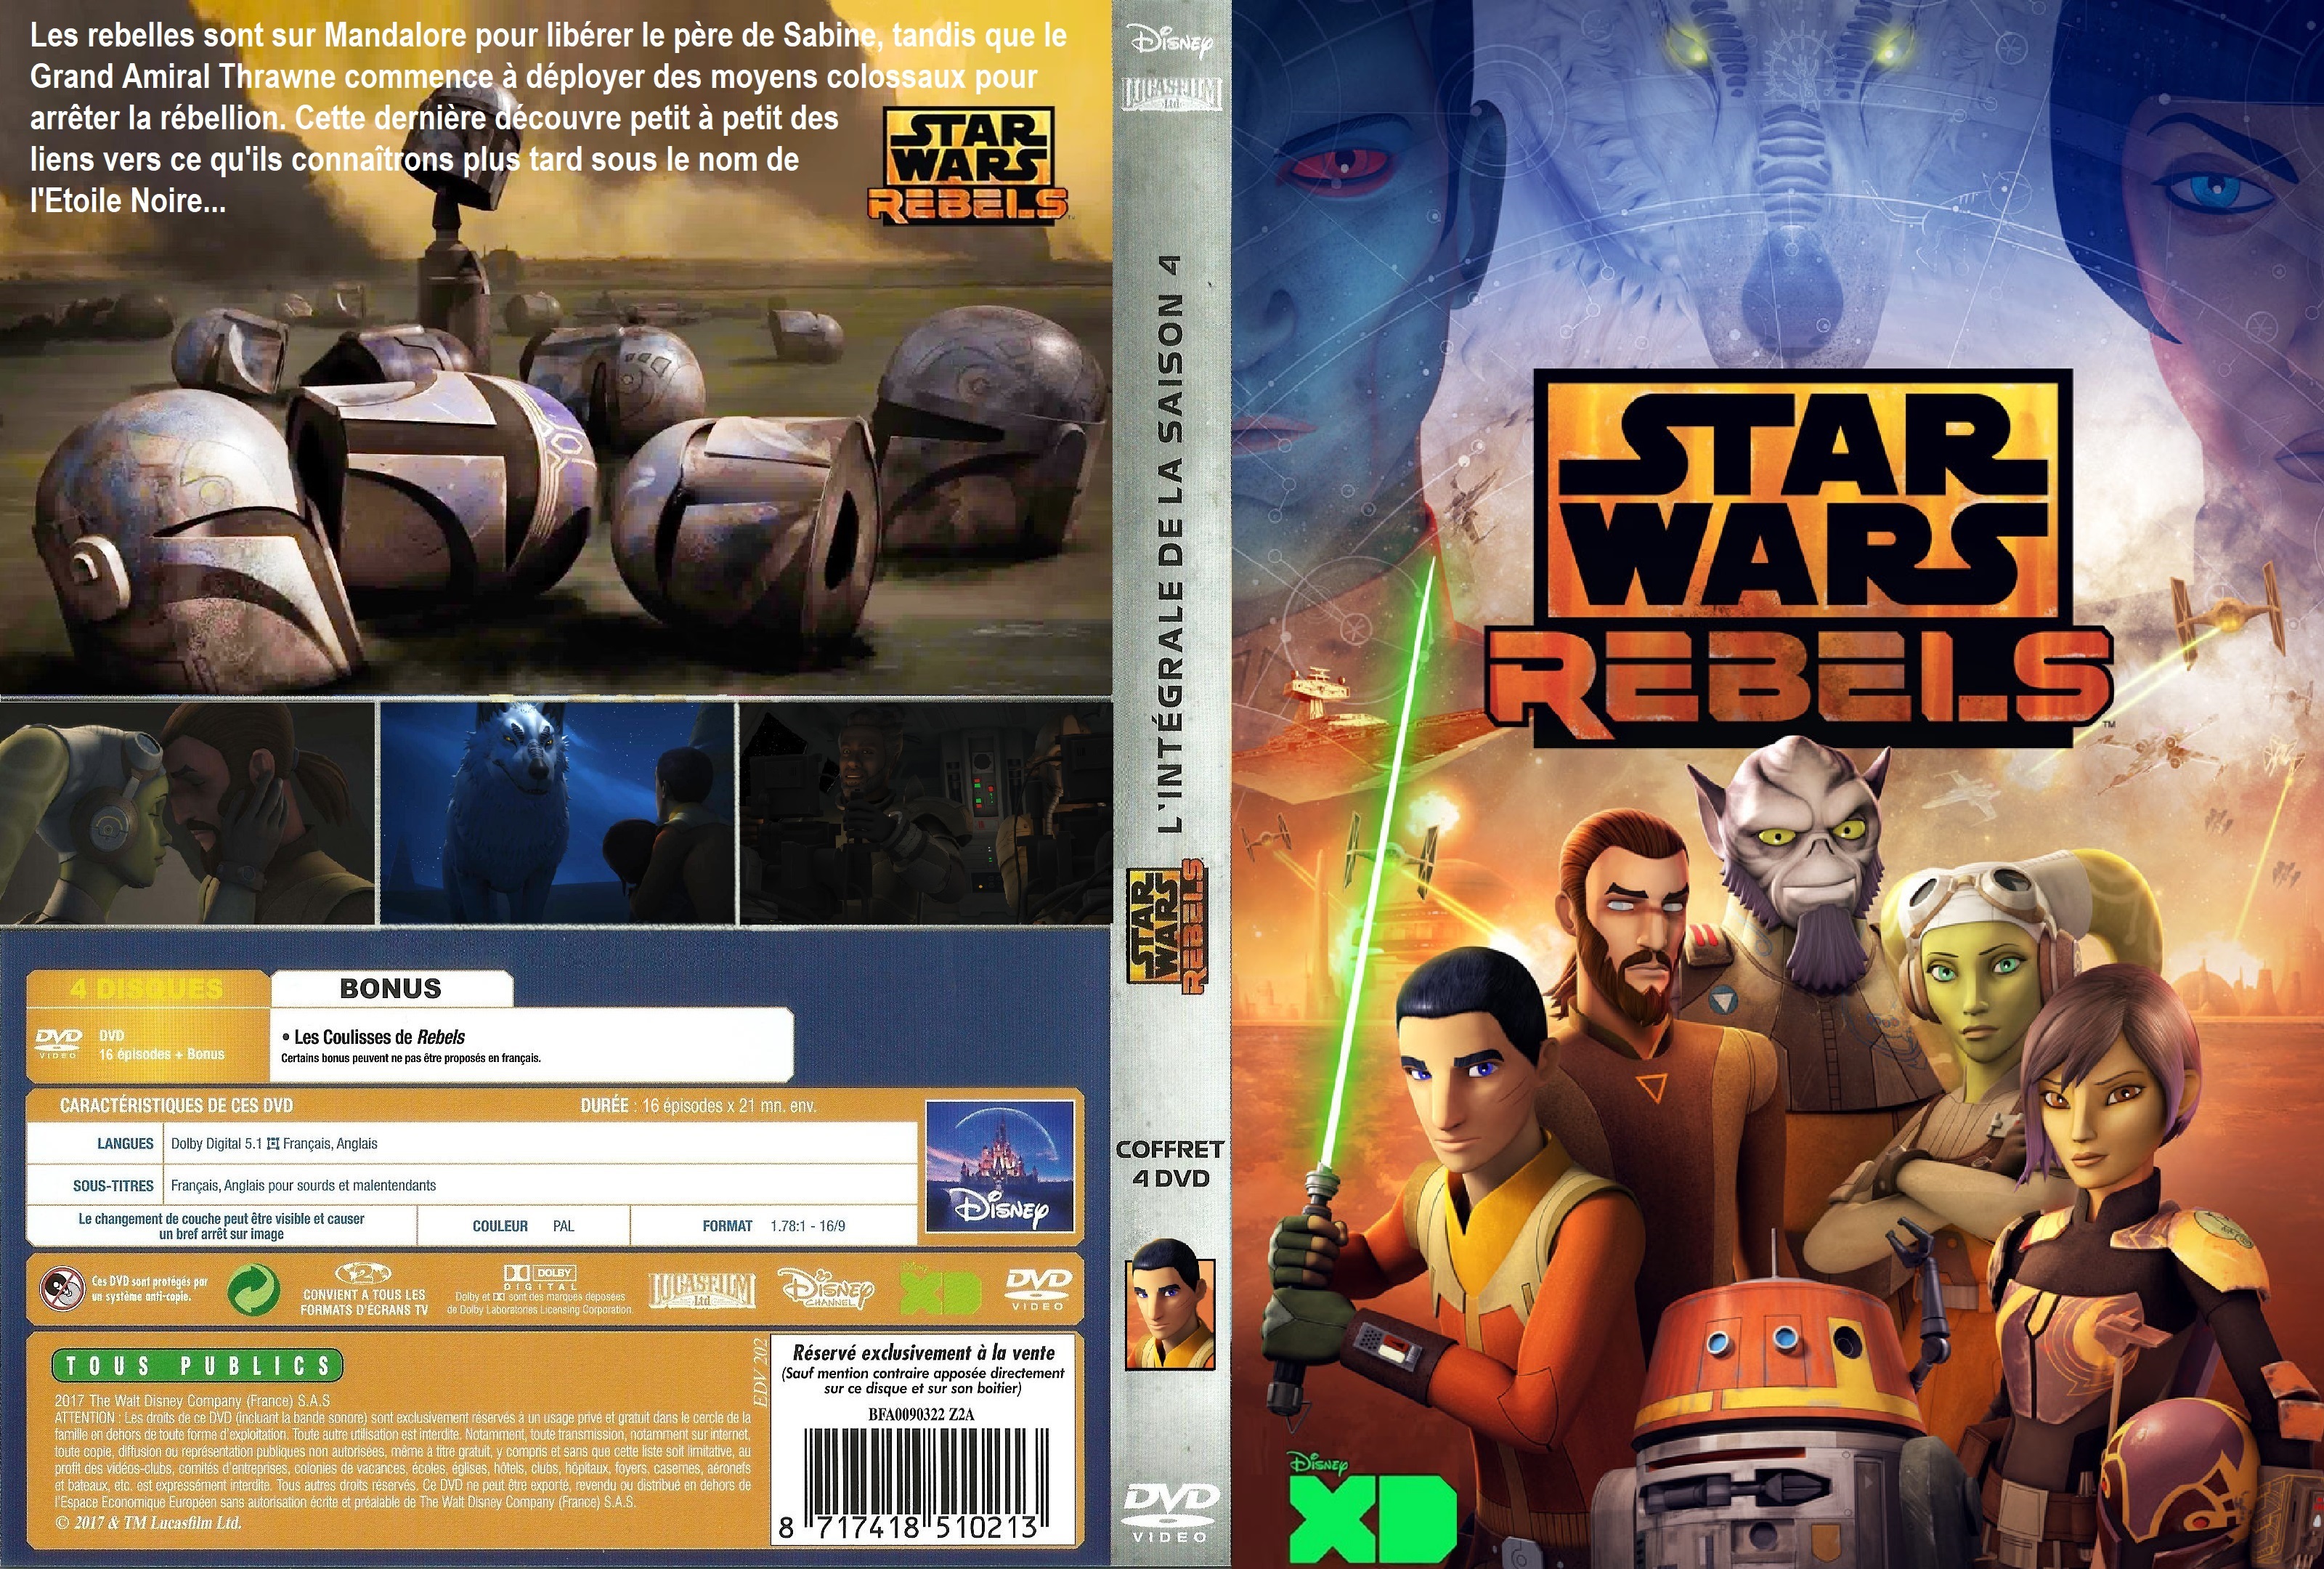 Jaquette DVD Star Wars Rebels saison 4 custom